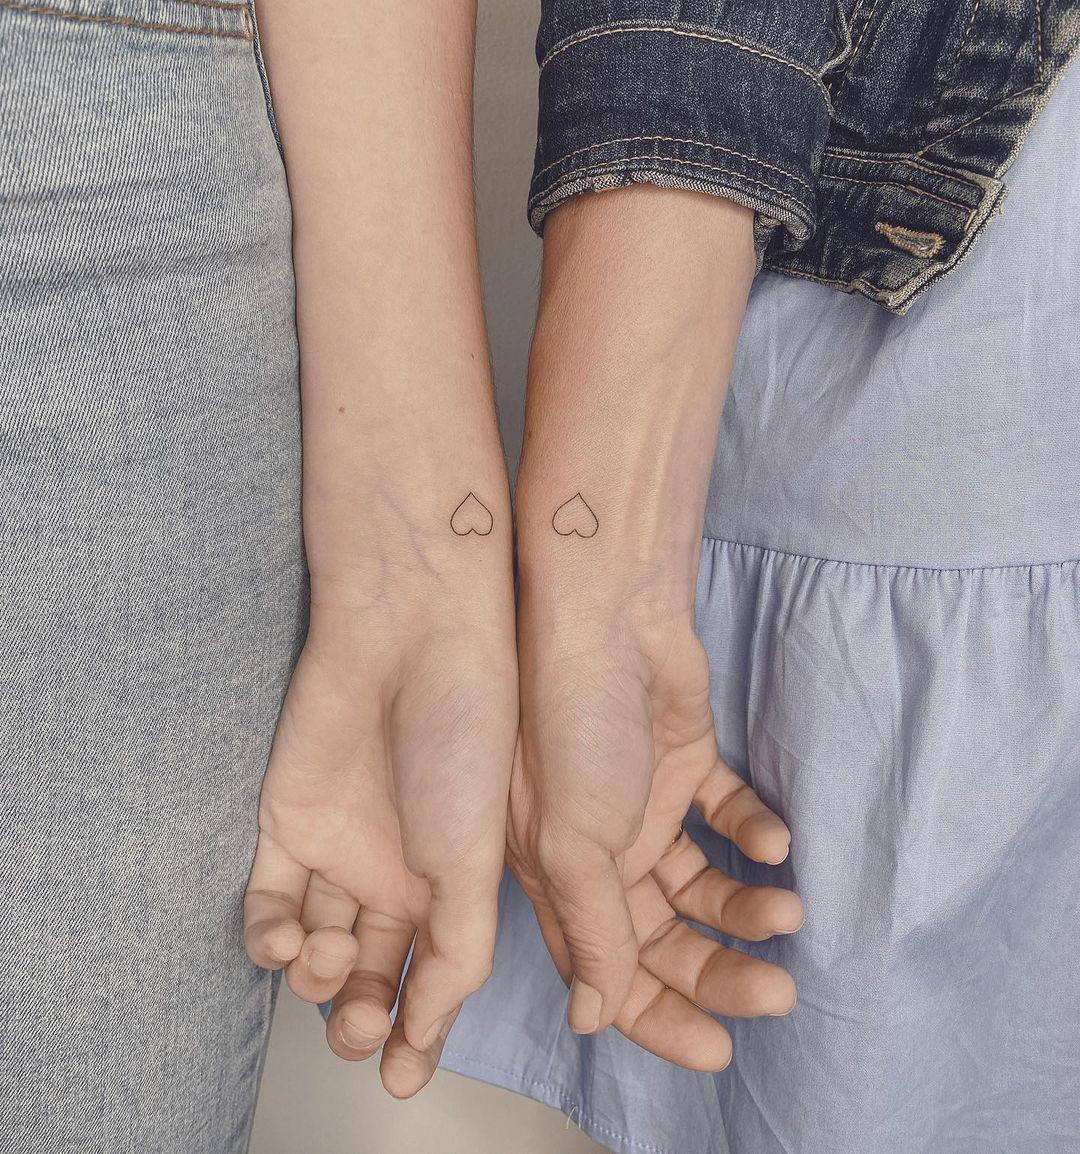 Tatuaje de corazón pequeño en pareja